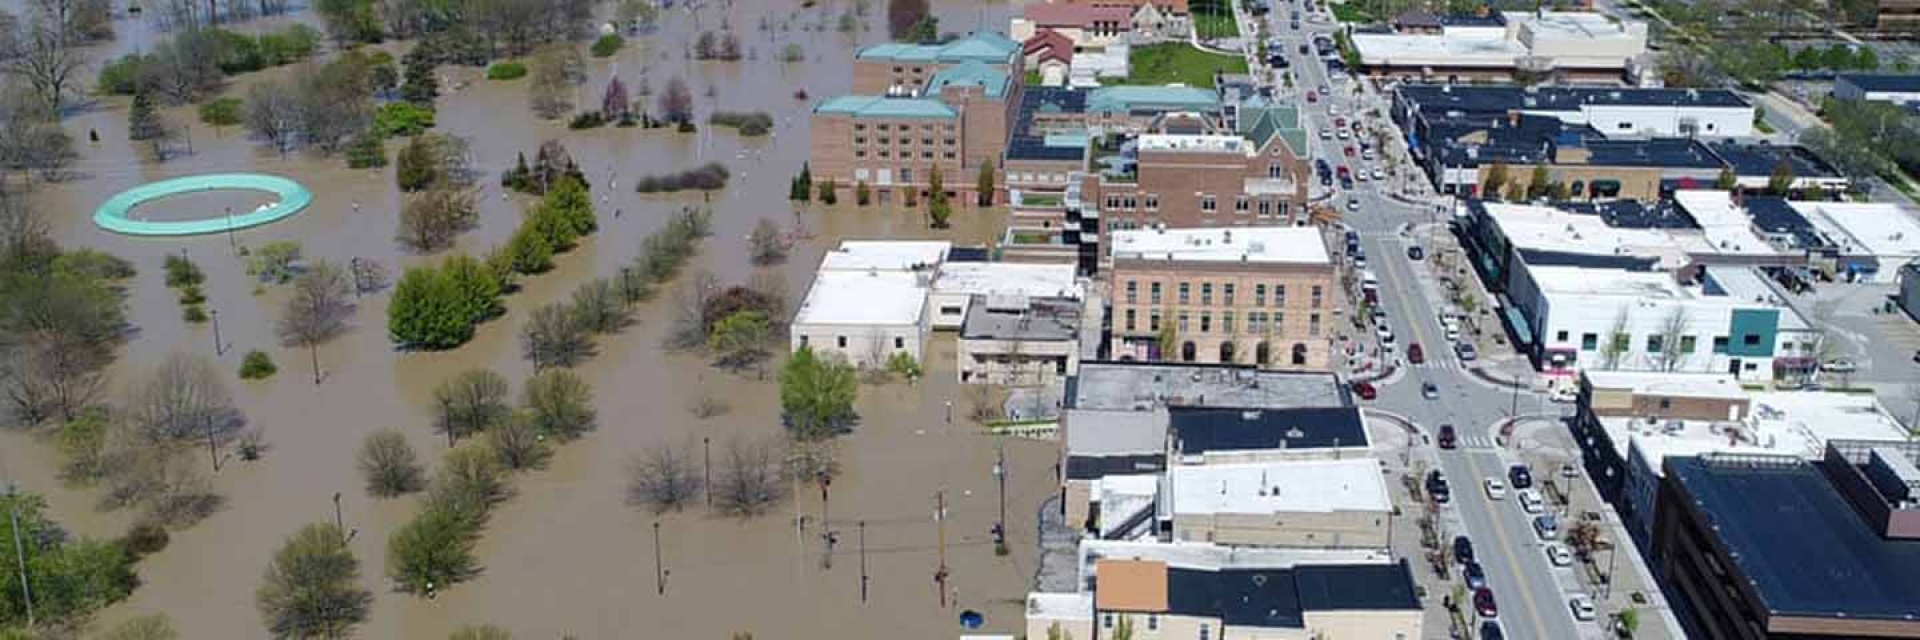 BELFOR Responds To Historic Flooding In Midland MI